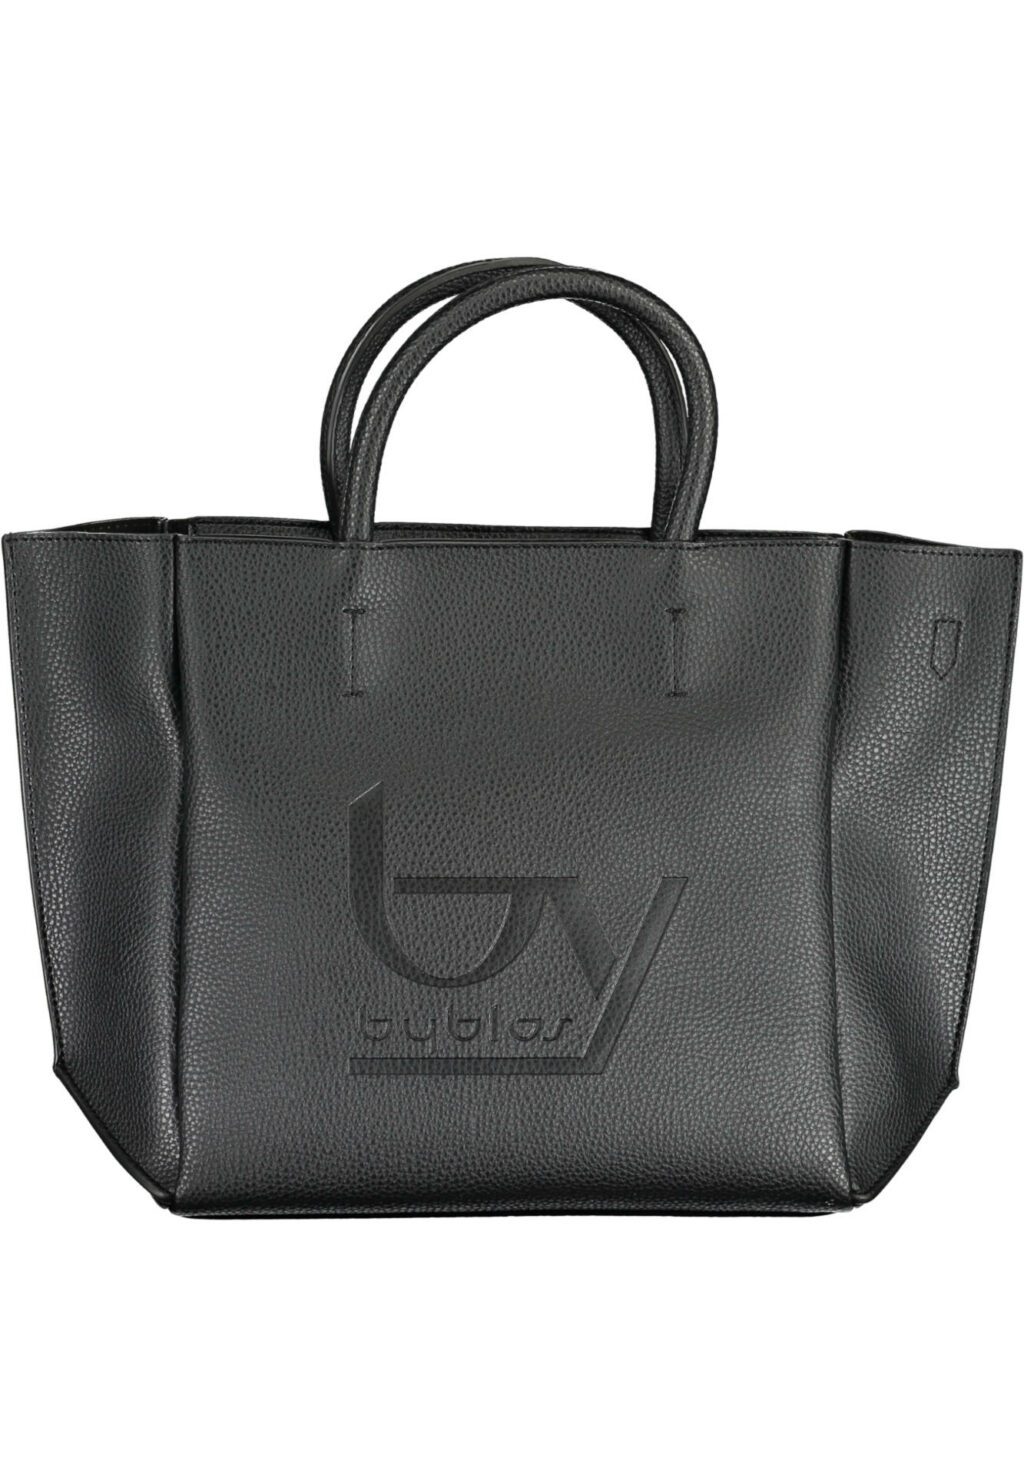 BYBLOS BLACK WOMEN'S BAG 20100081_NERO_293-BLK